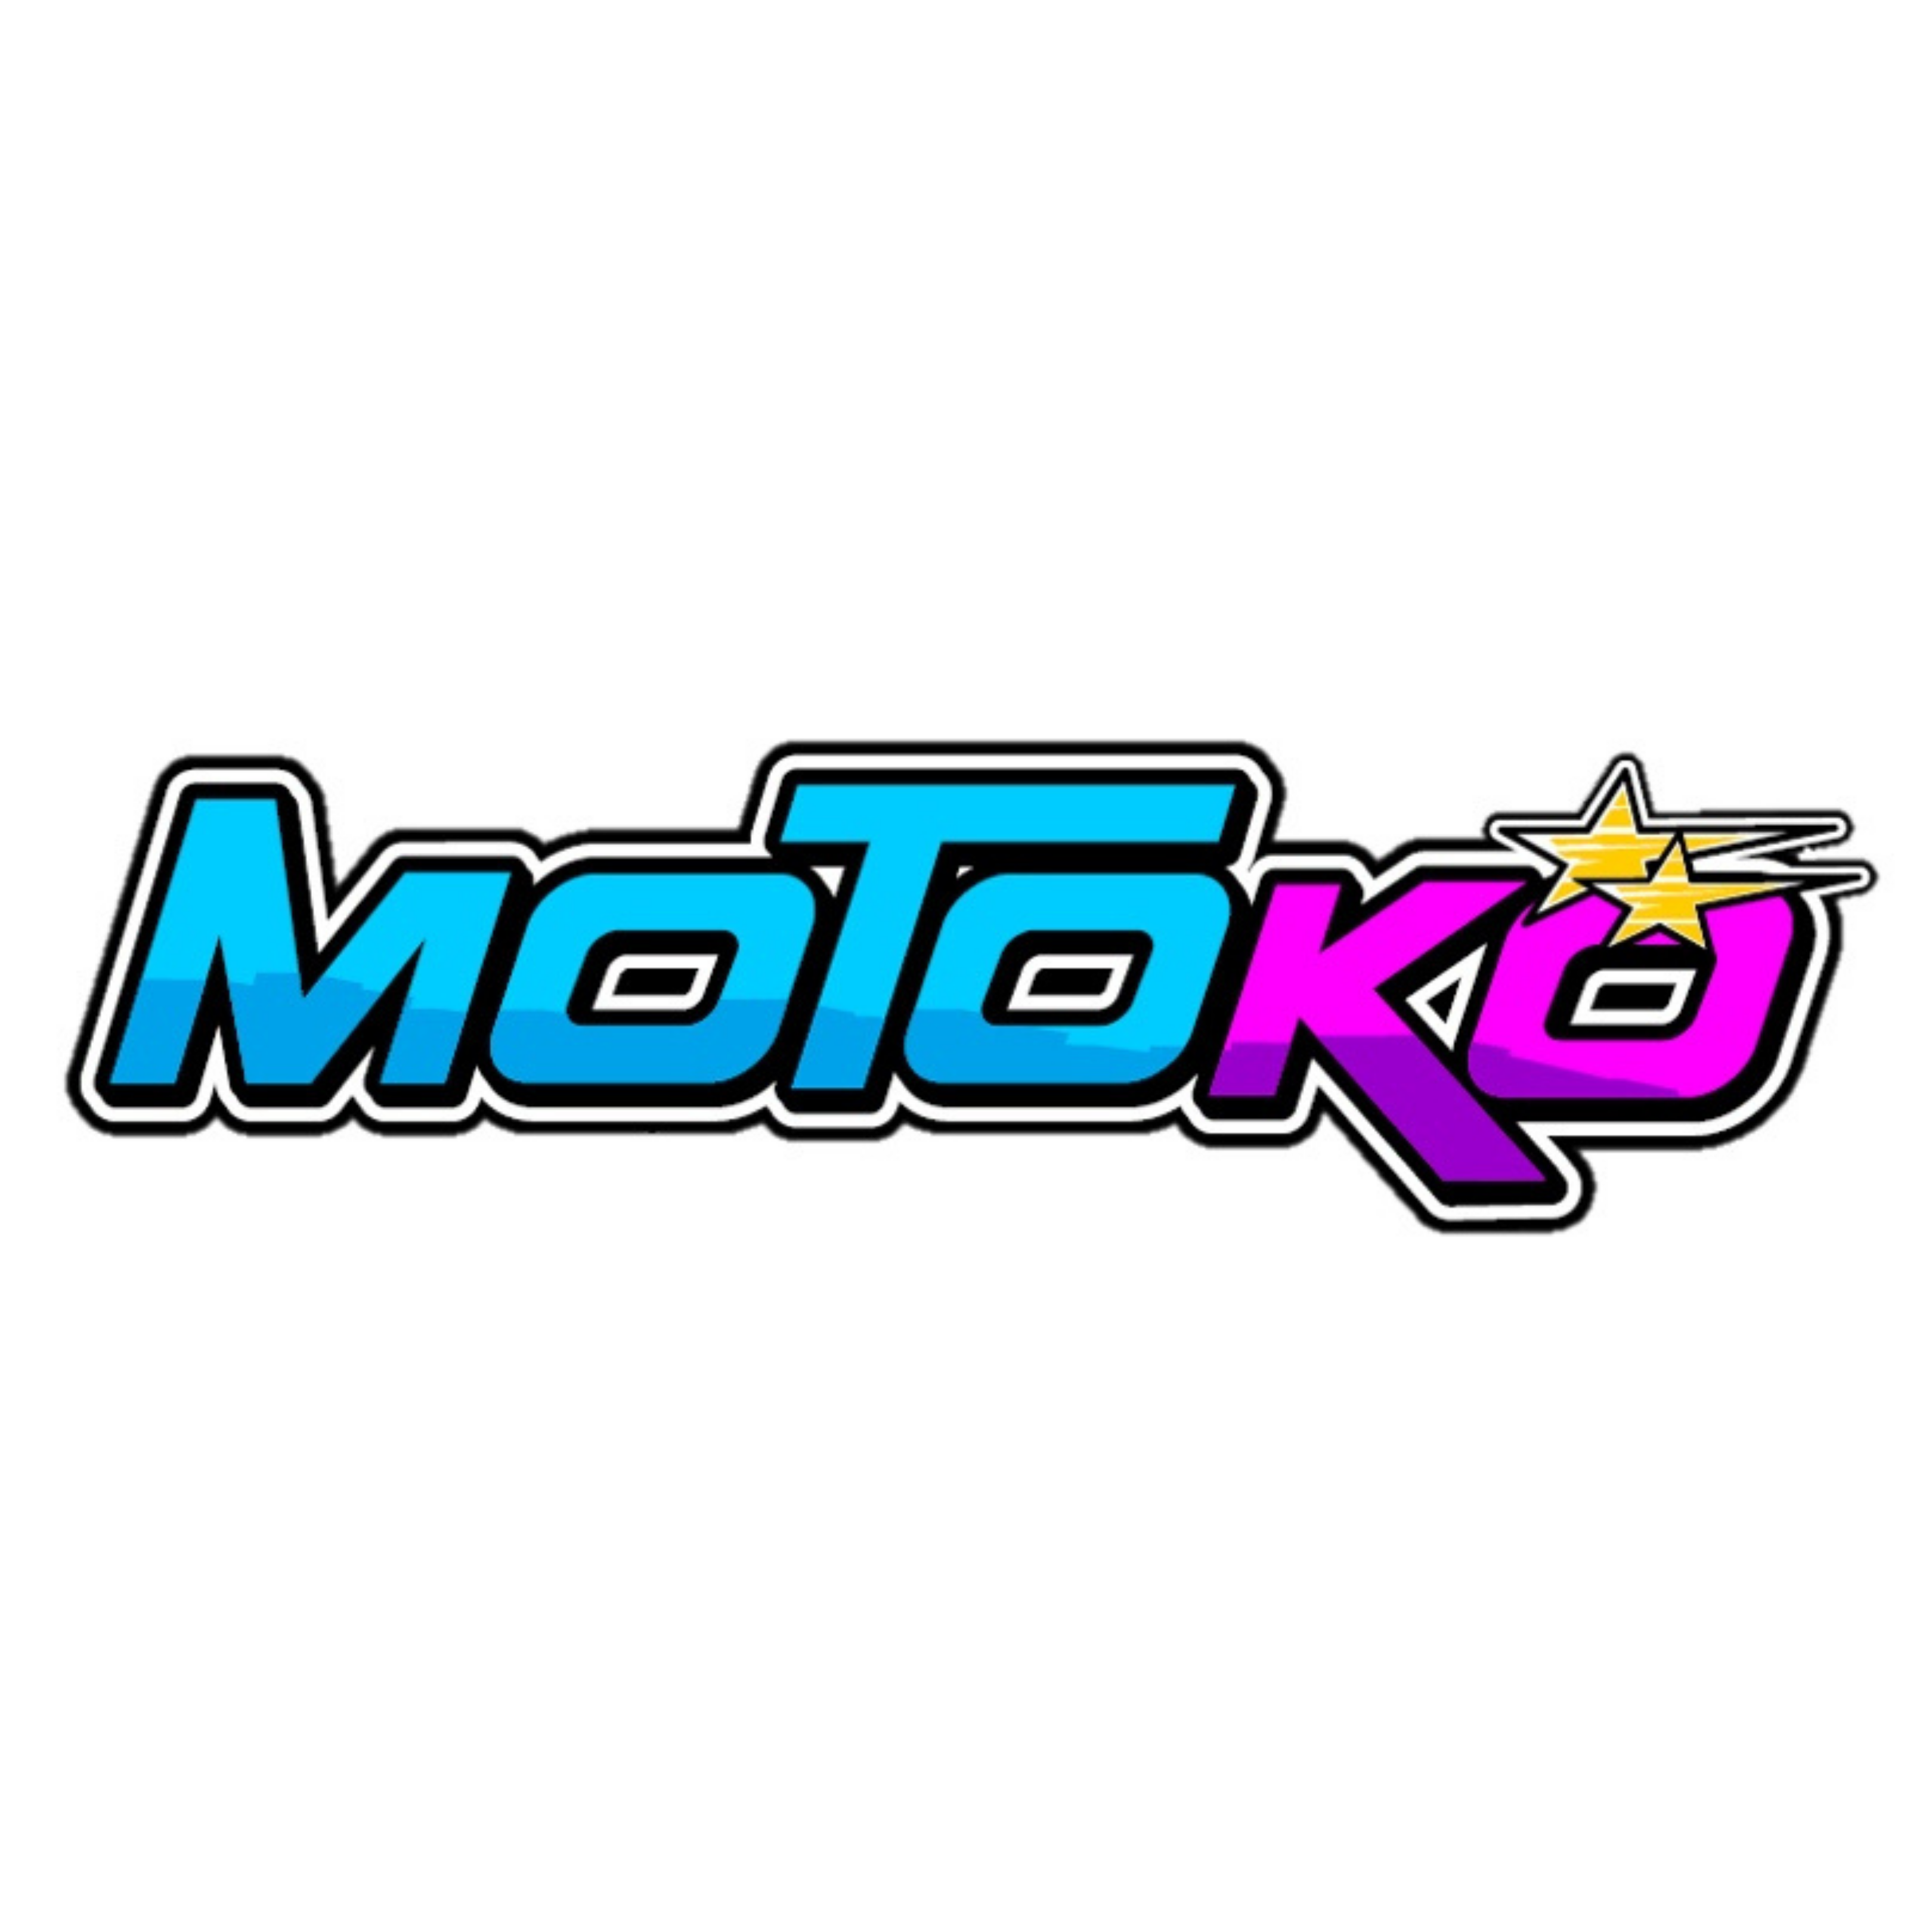 Motoko logo